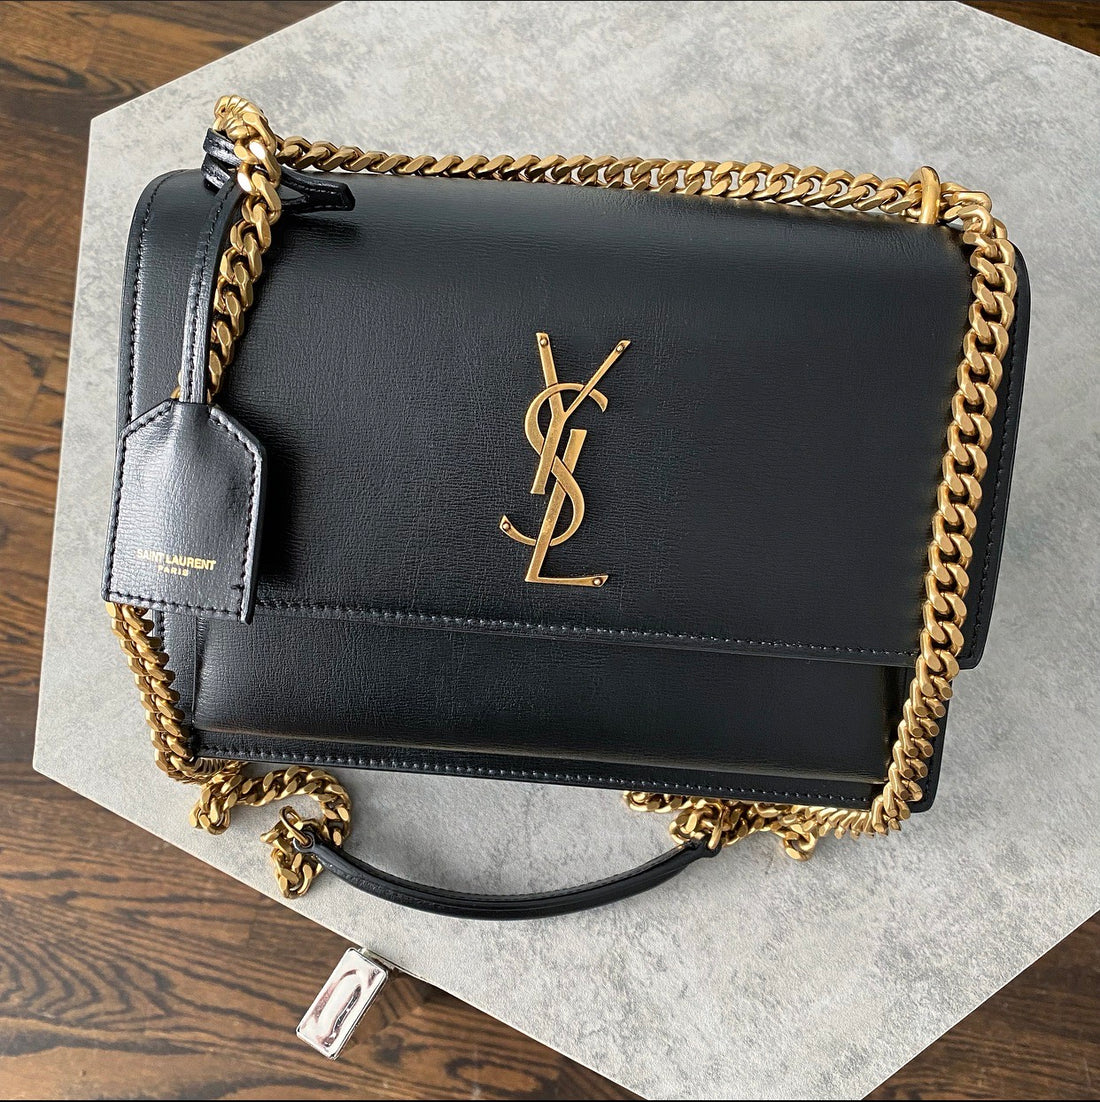 Saint Laurent - Authenticated Sunset Clutch Bag - Leather Black for Women, Good Condition